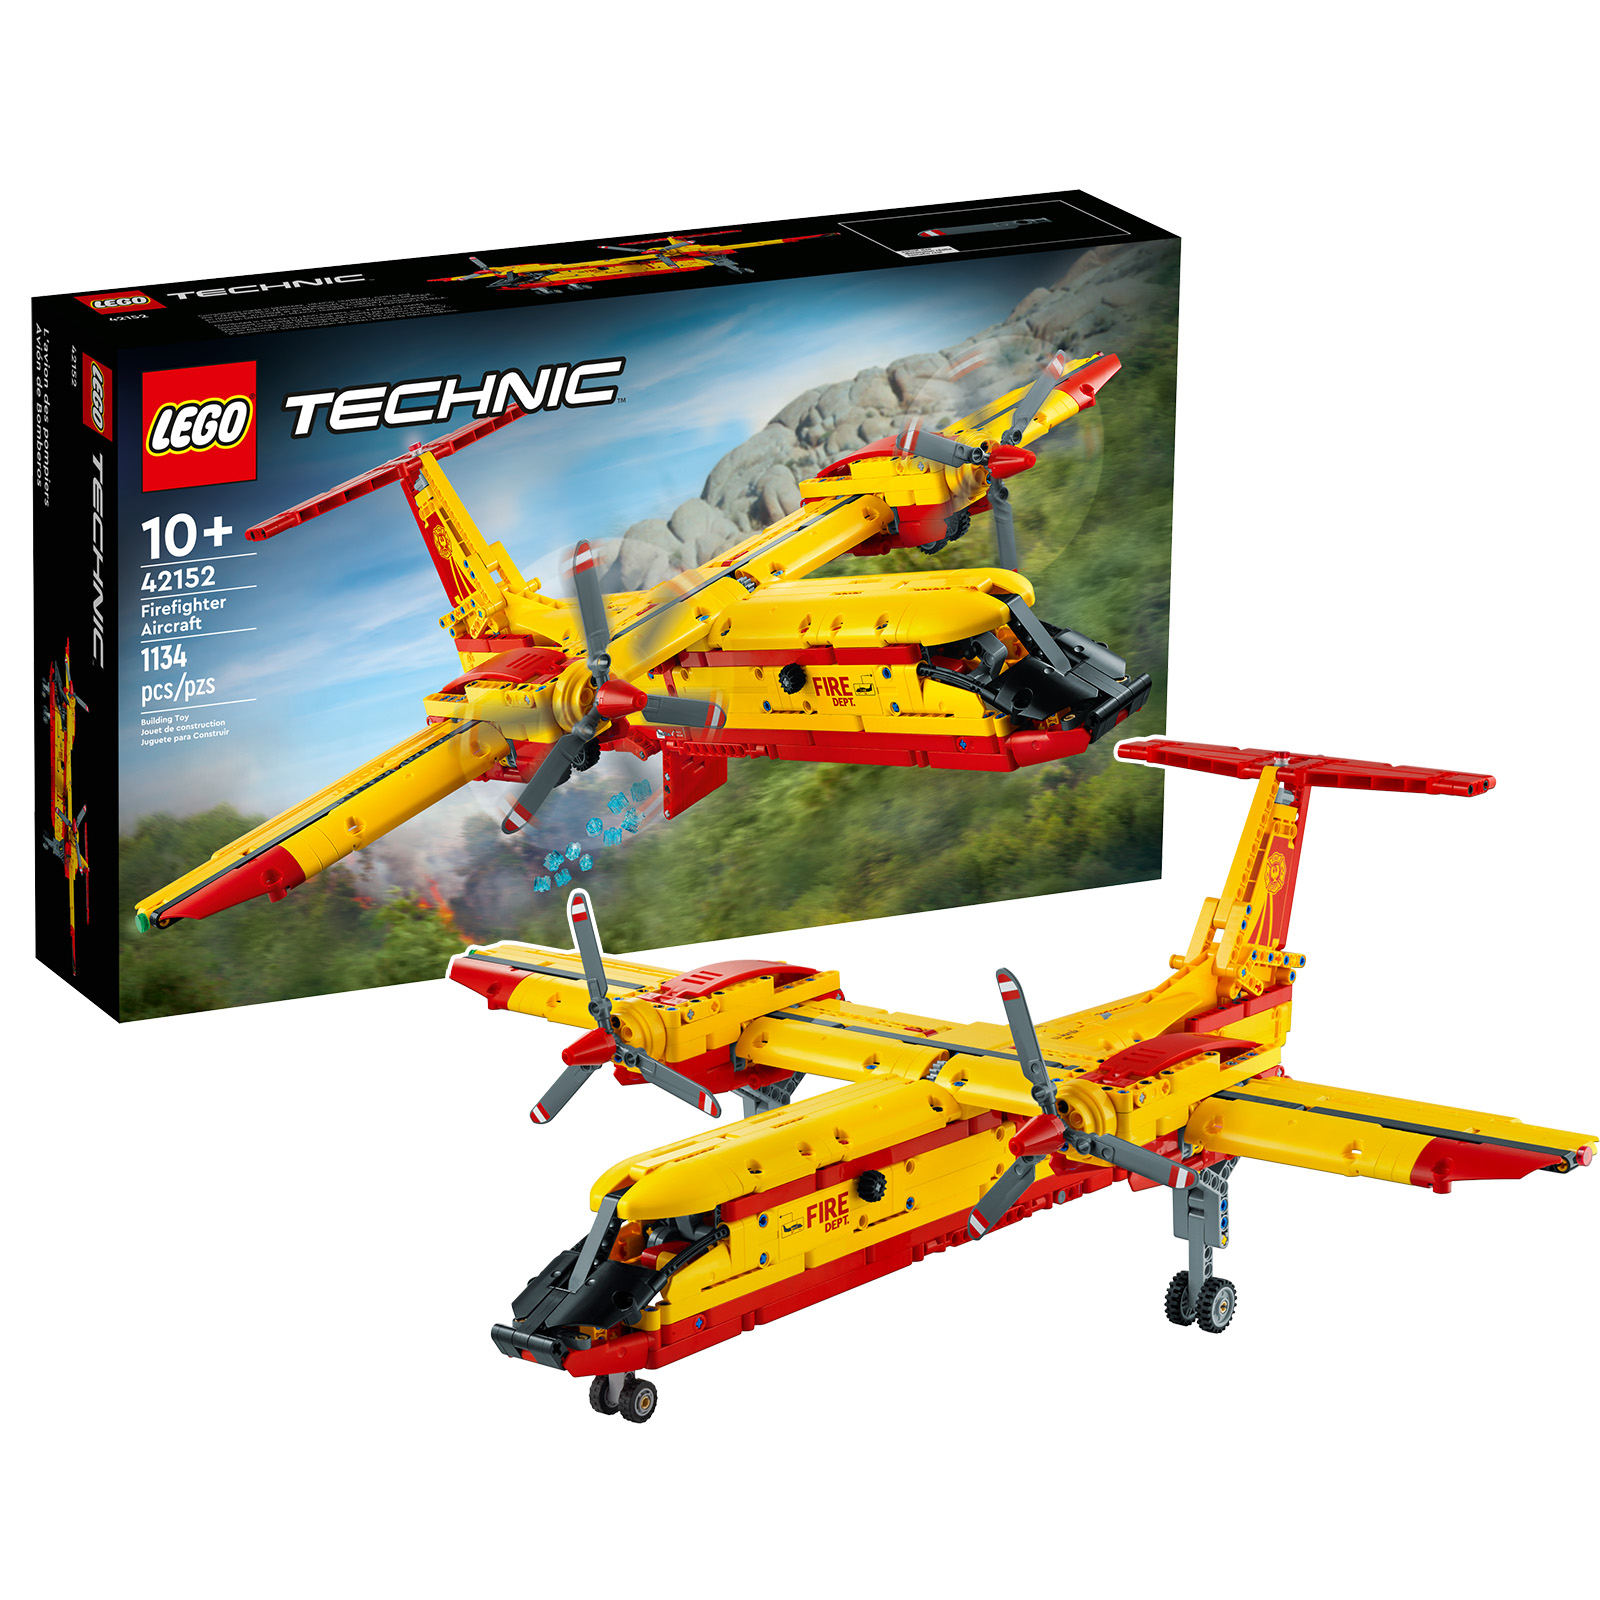 LEGO দোকানে: LEGO Technic 42152 Firefighter Aircraft সেটটি প্রি-অর্ডারে রয়েছে